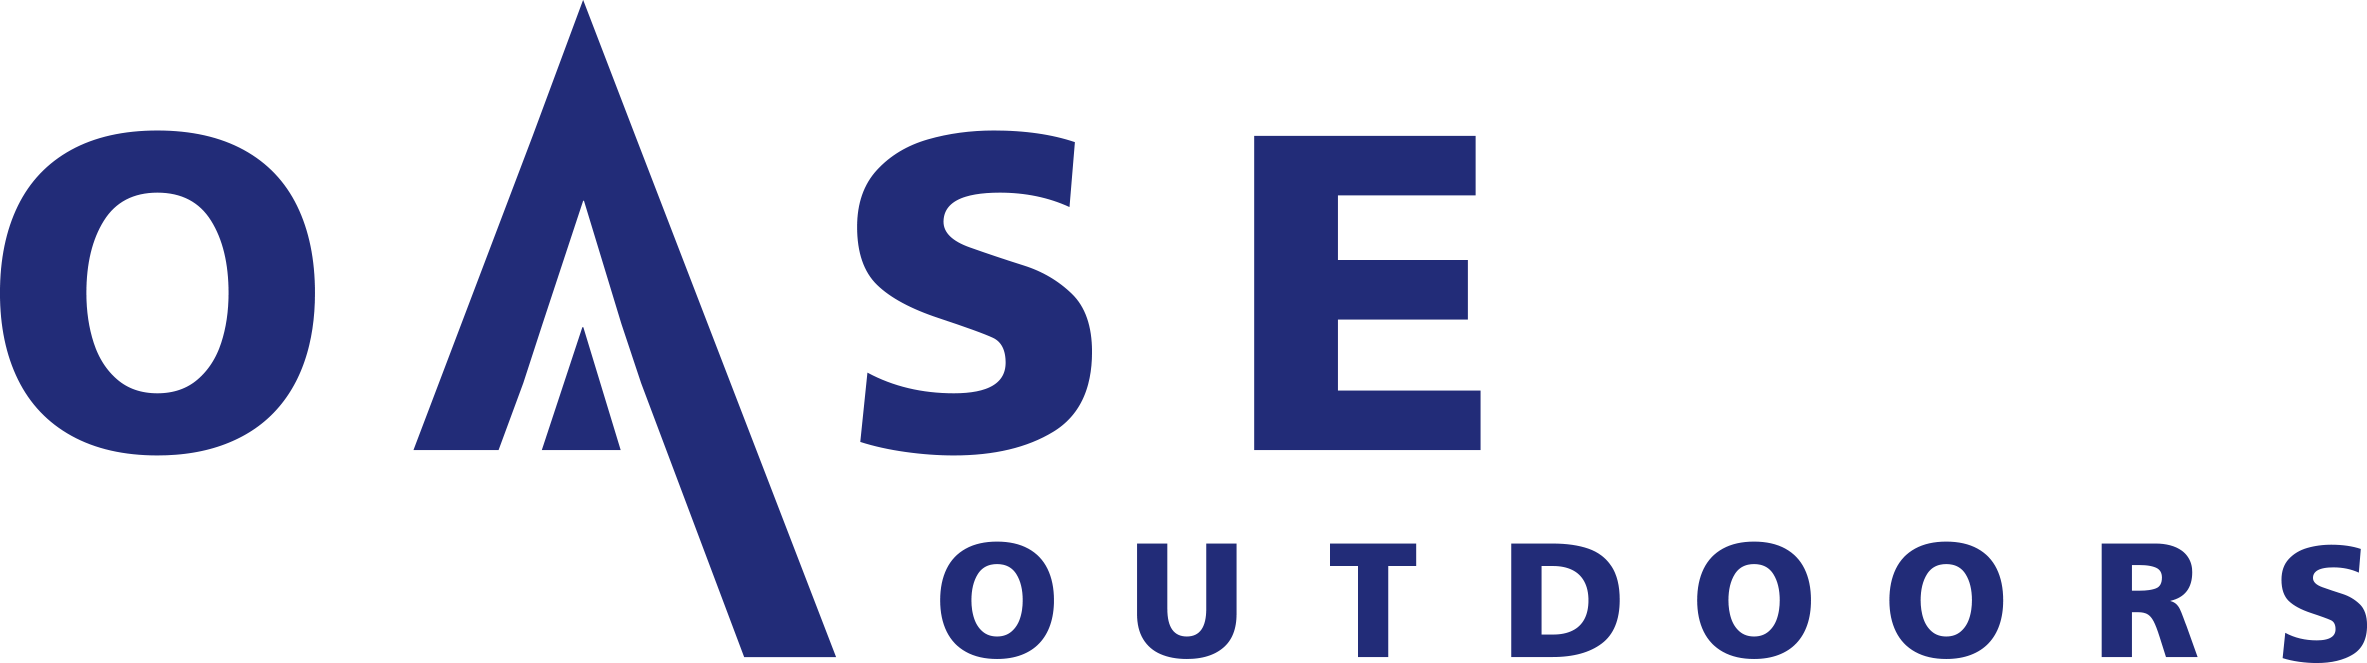 Oase-Outdoors-logo